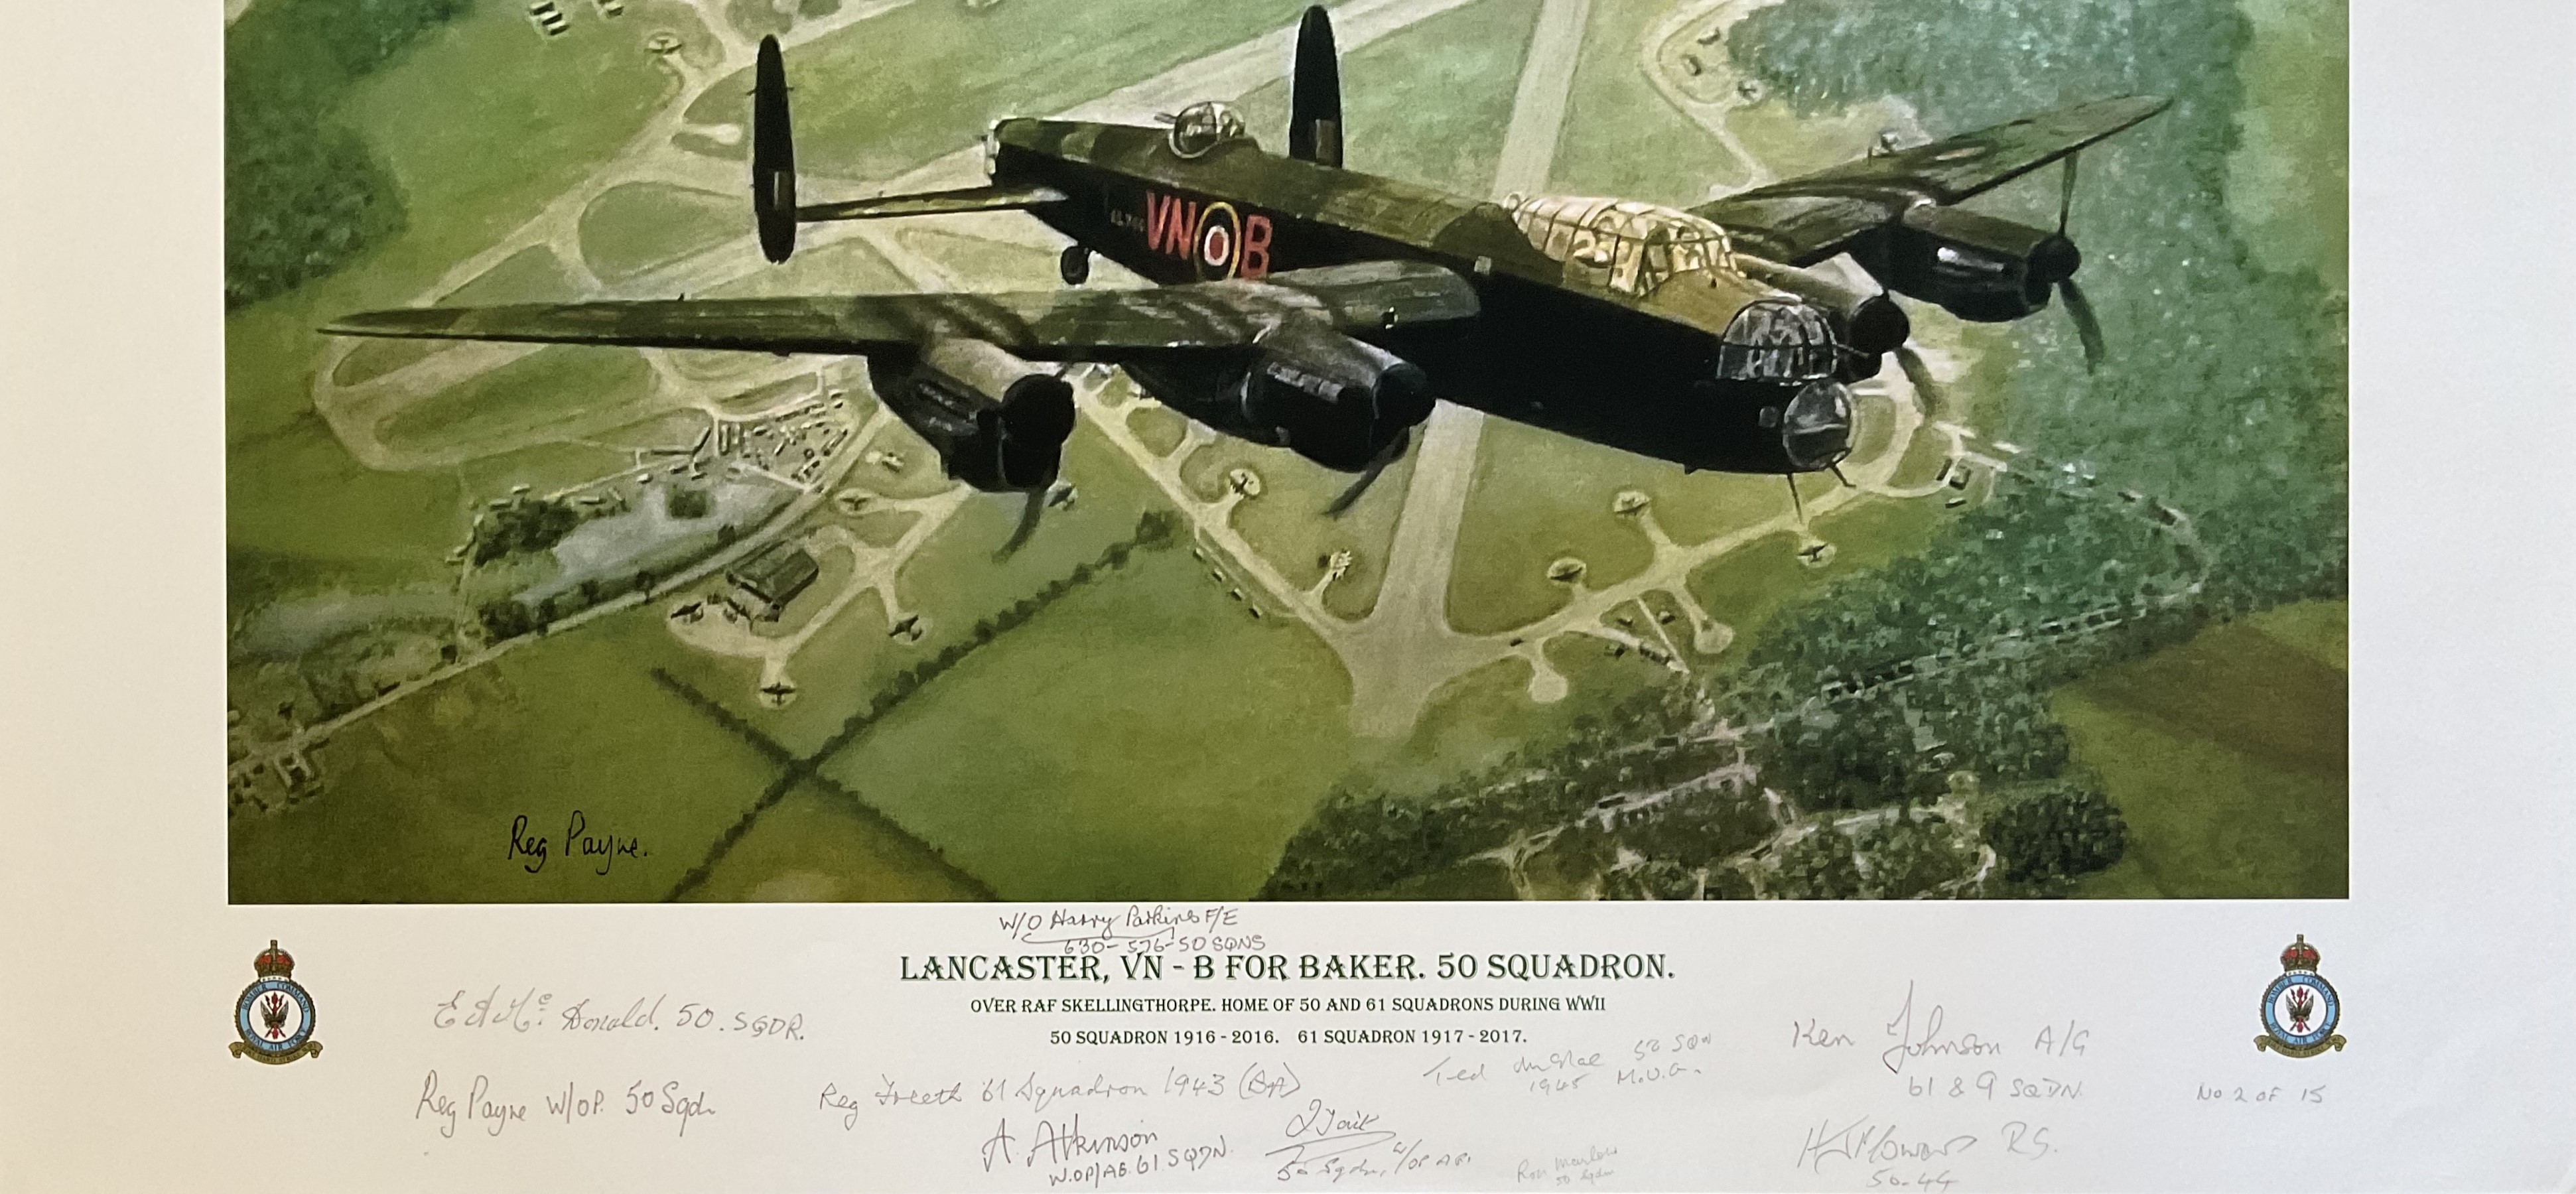 Lancaster VN-B for Baker, 50 Squadron - Over RAF Skellingthorpe By Reg Payne, Limited Edition Print, - Image 2 of 2